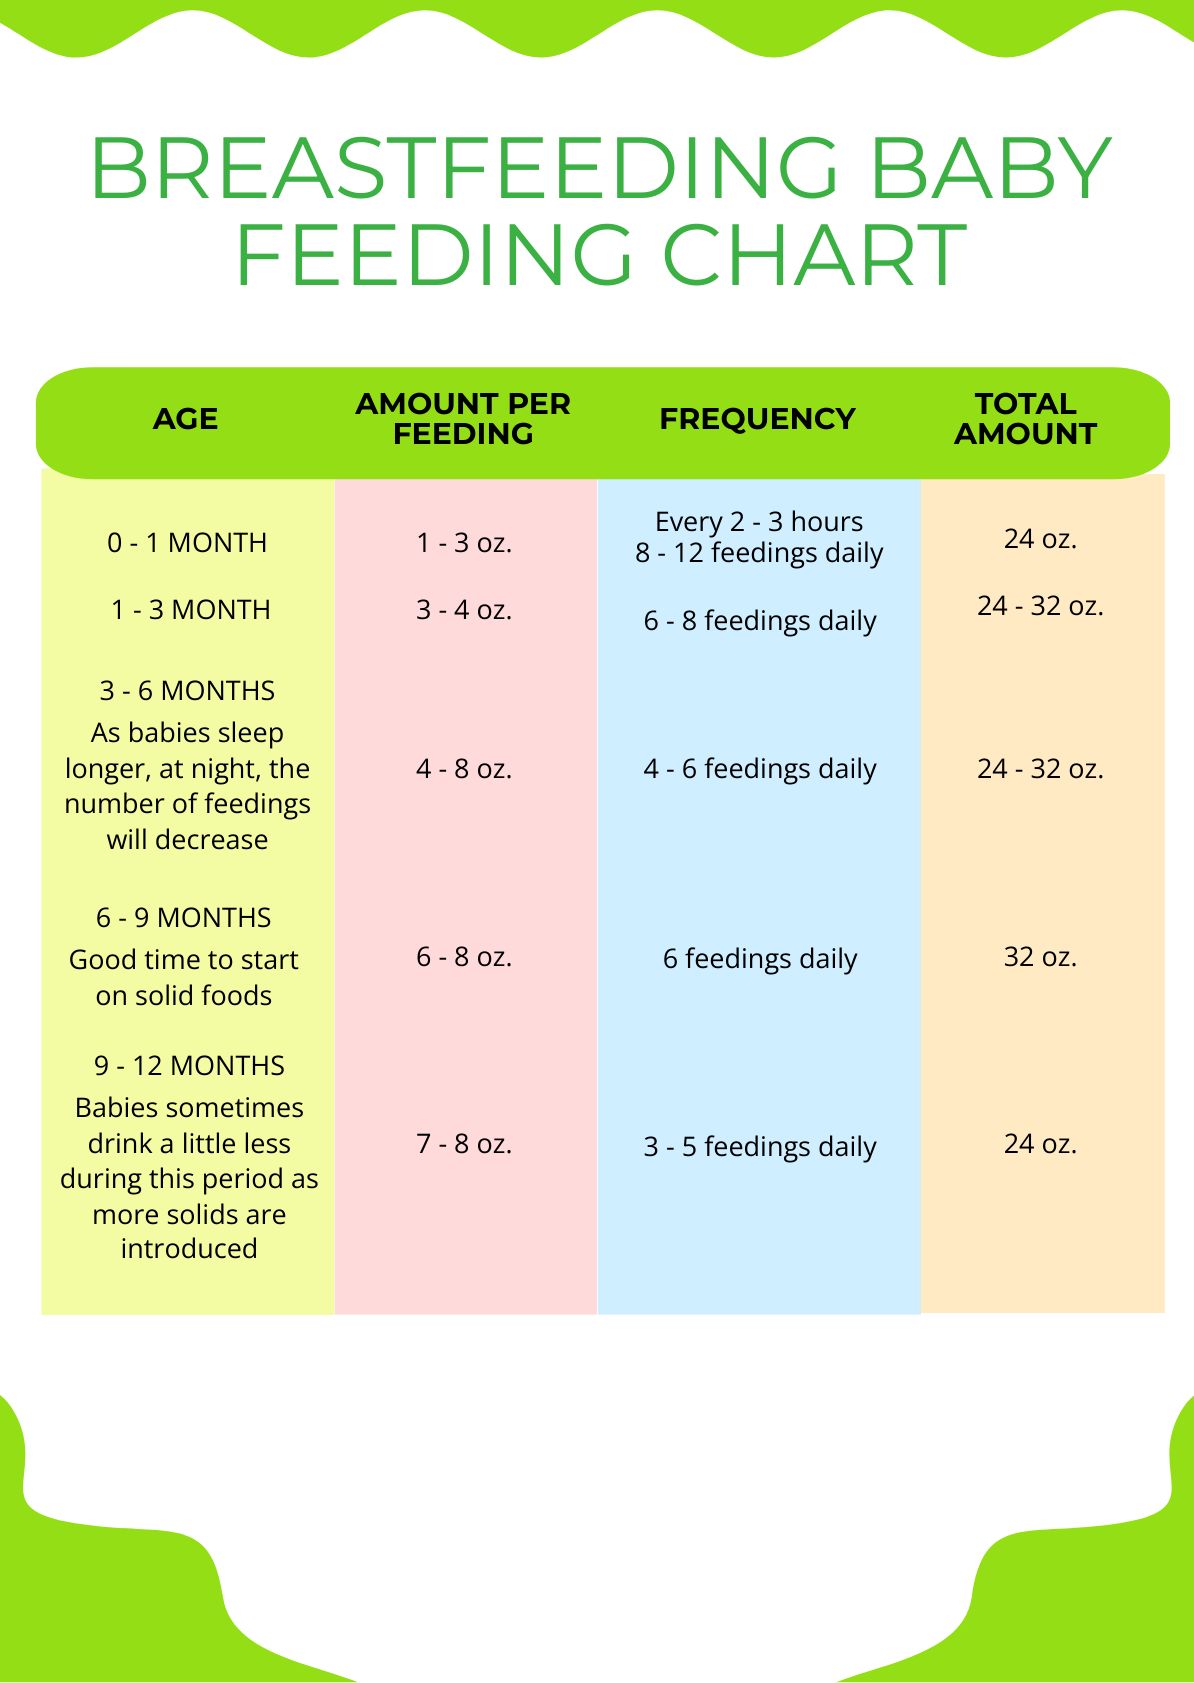 Baby feeding chart - How many ounces of breastmilk should a baby